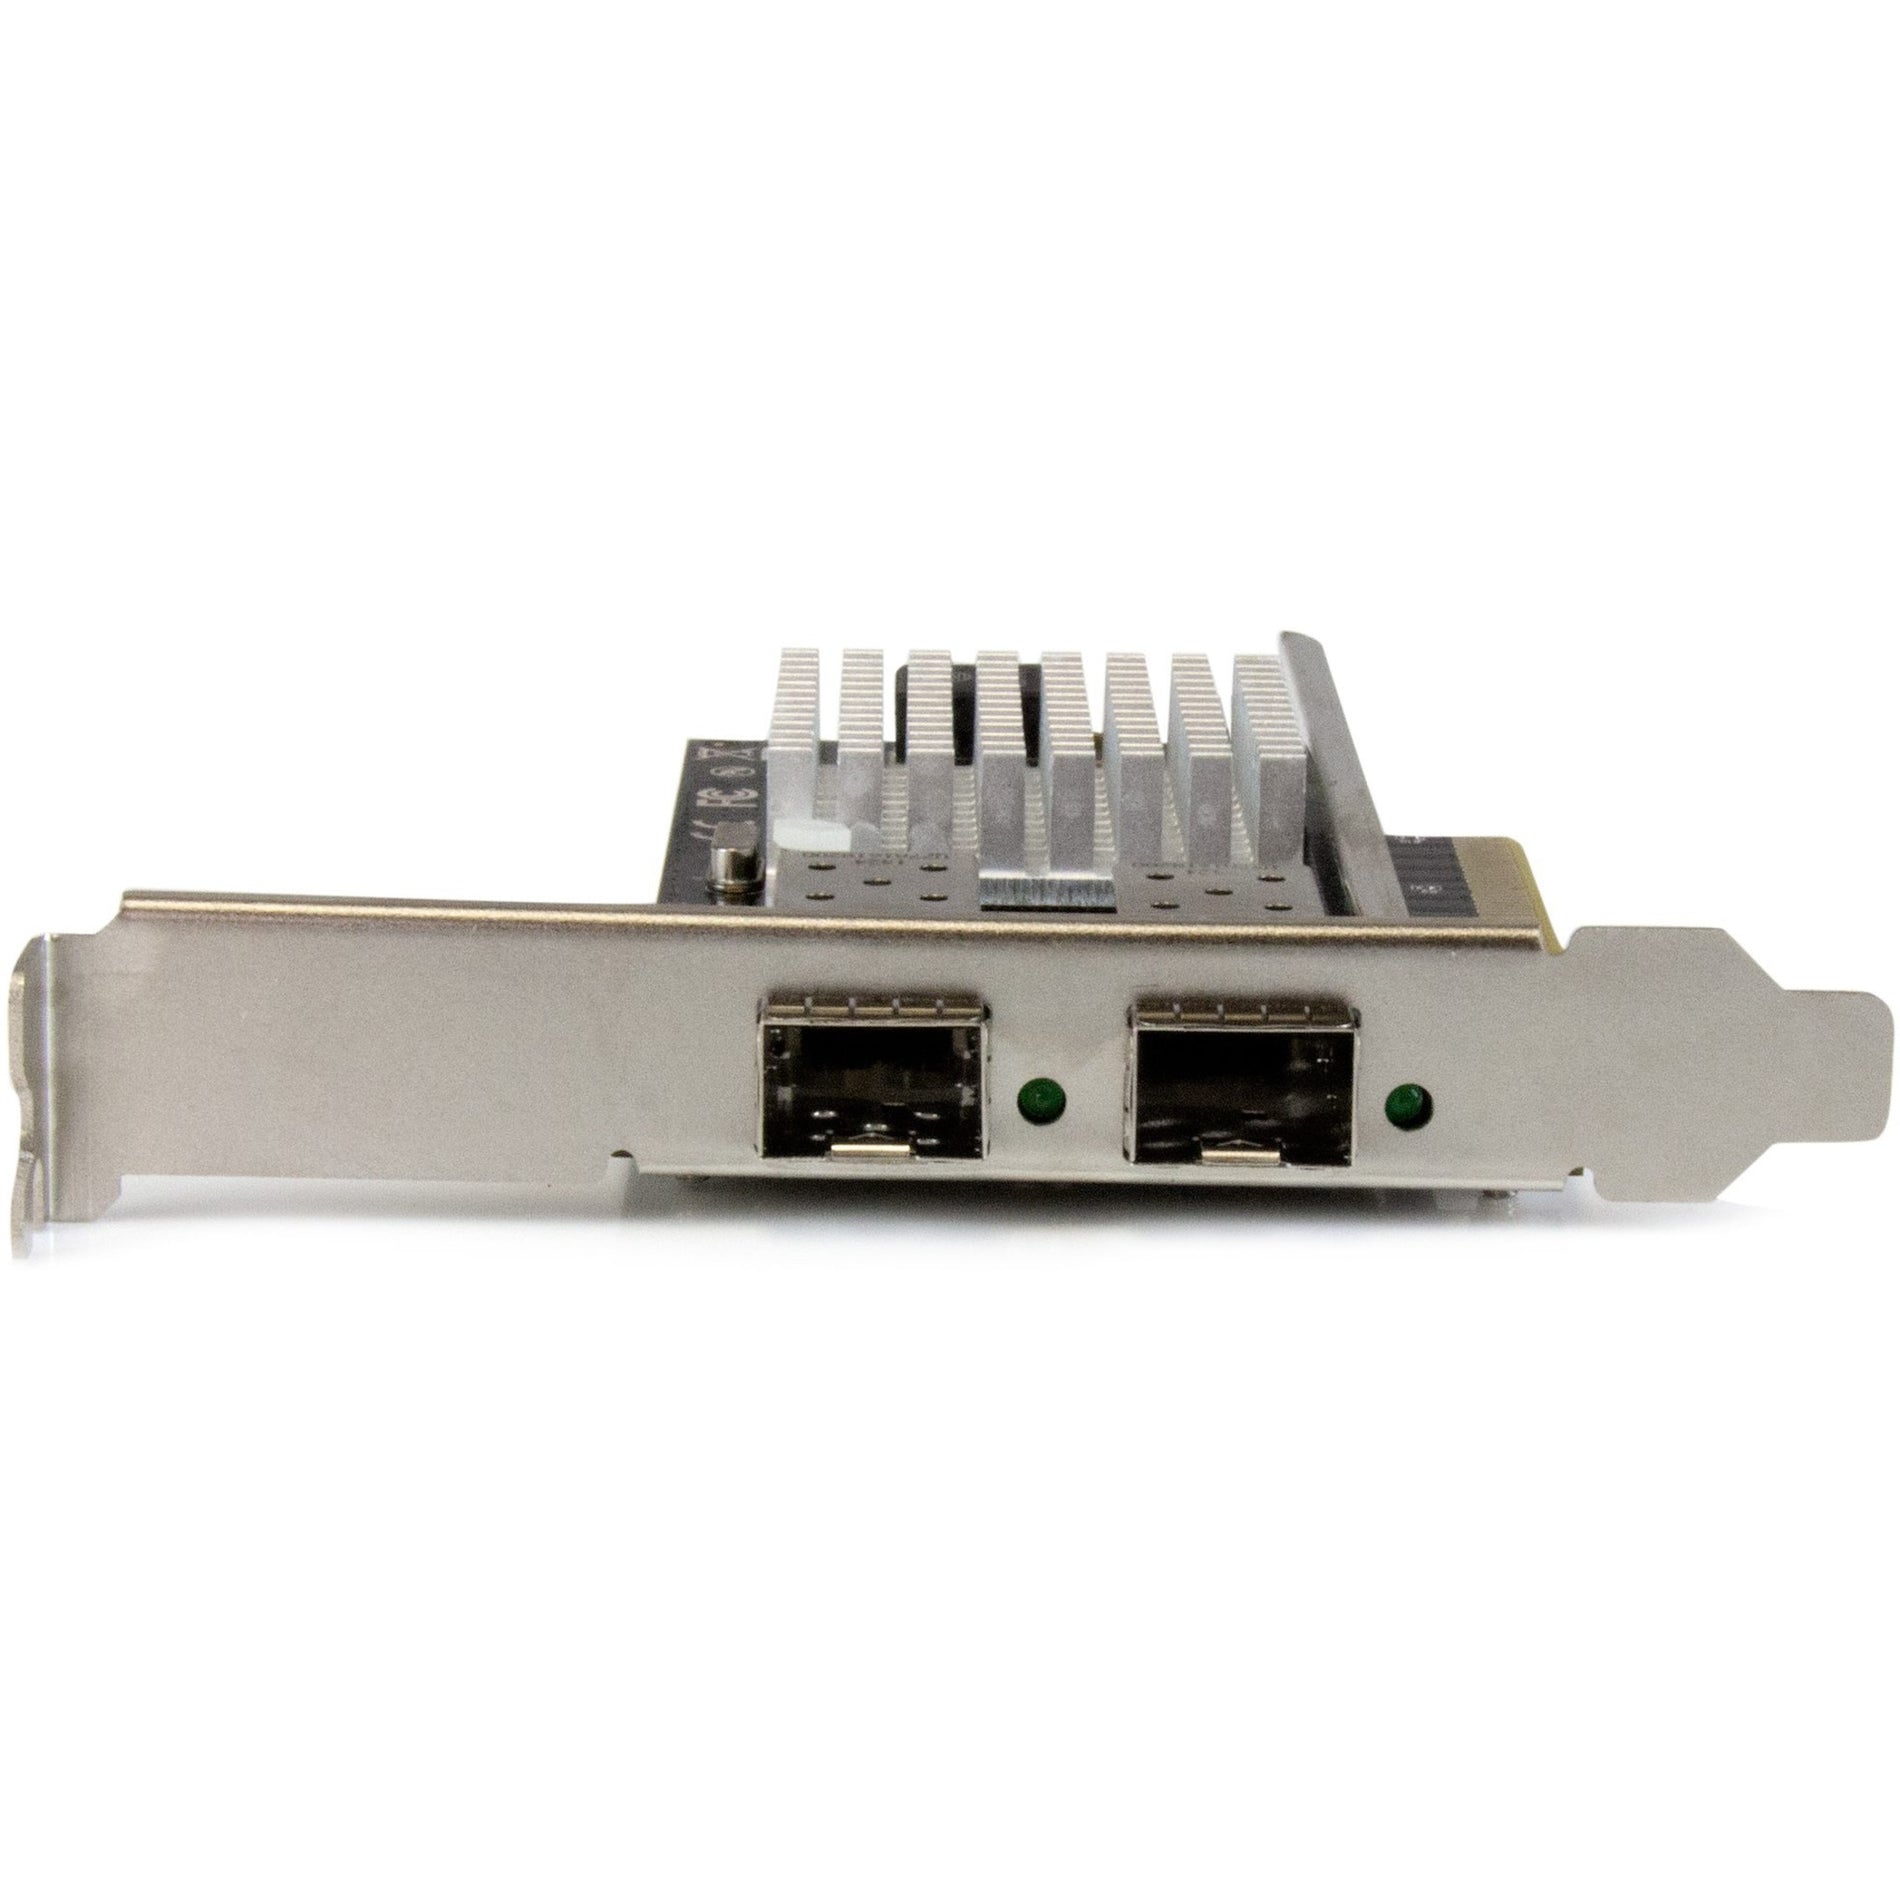 StarTech.com PEX20000SFPI 2-Port 10G Fiber Netzwerkkarte mit offenen SFP+ - PCIe Intel Chip High-Speed Ethernet Konnektivität